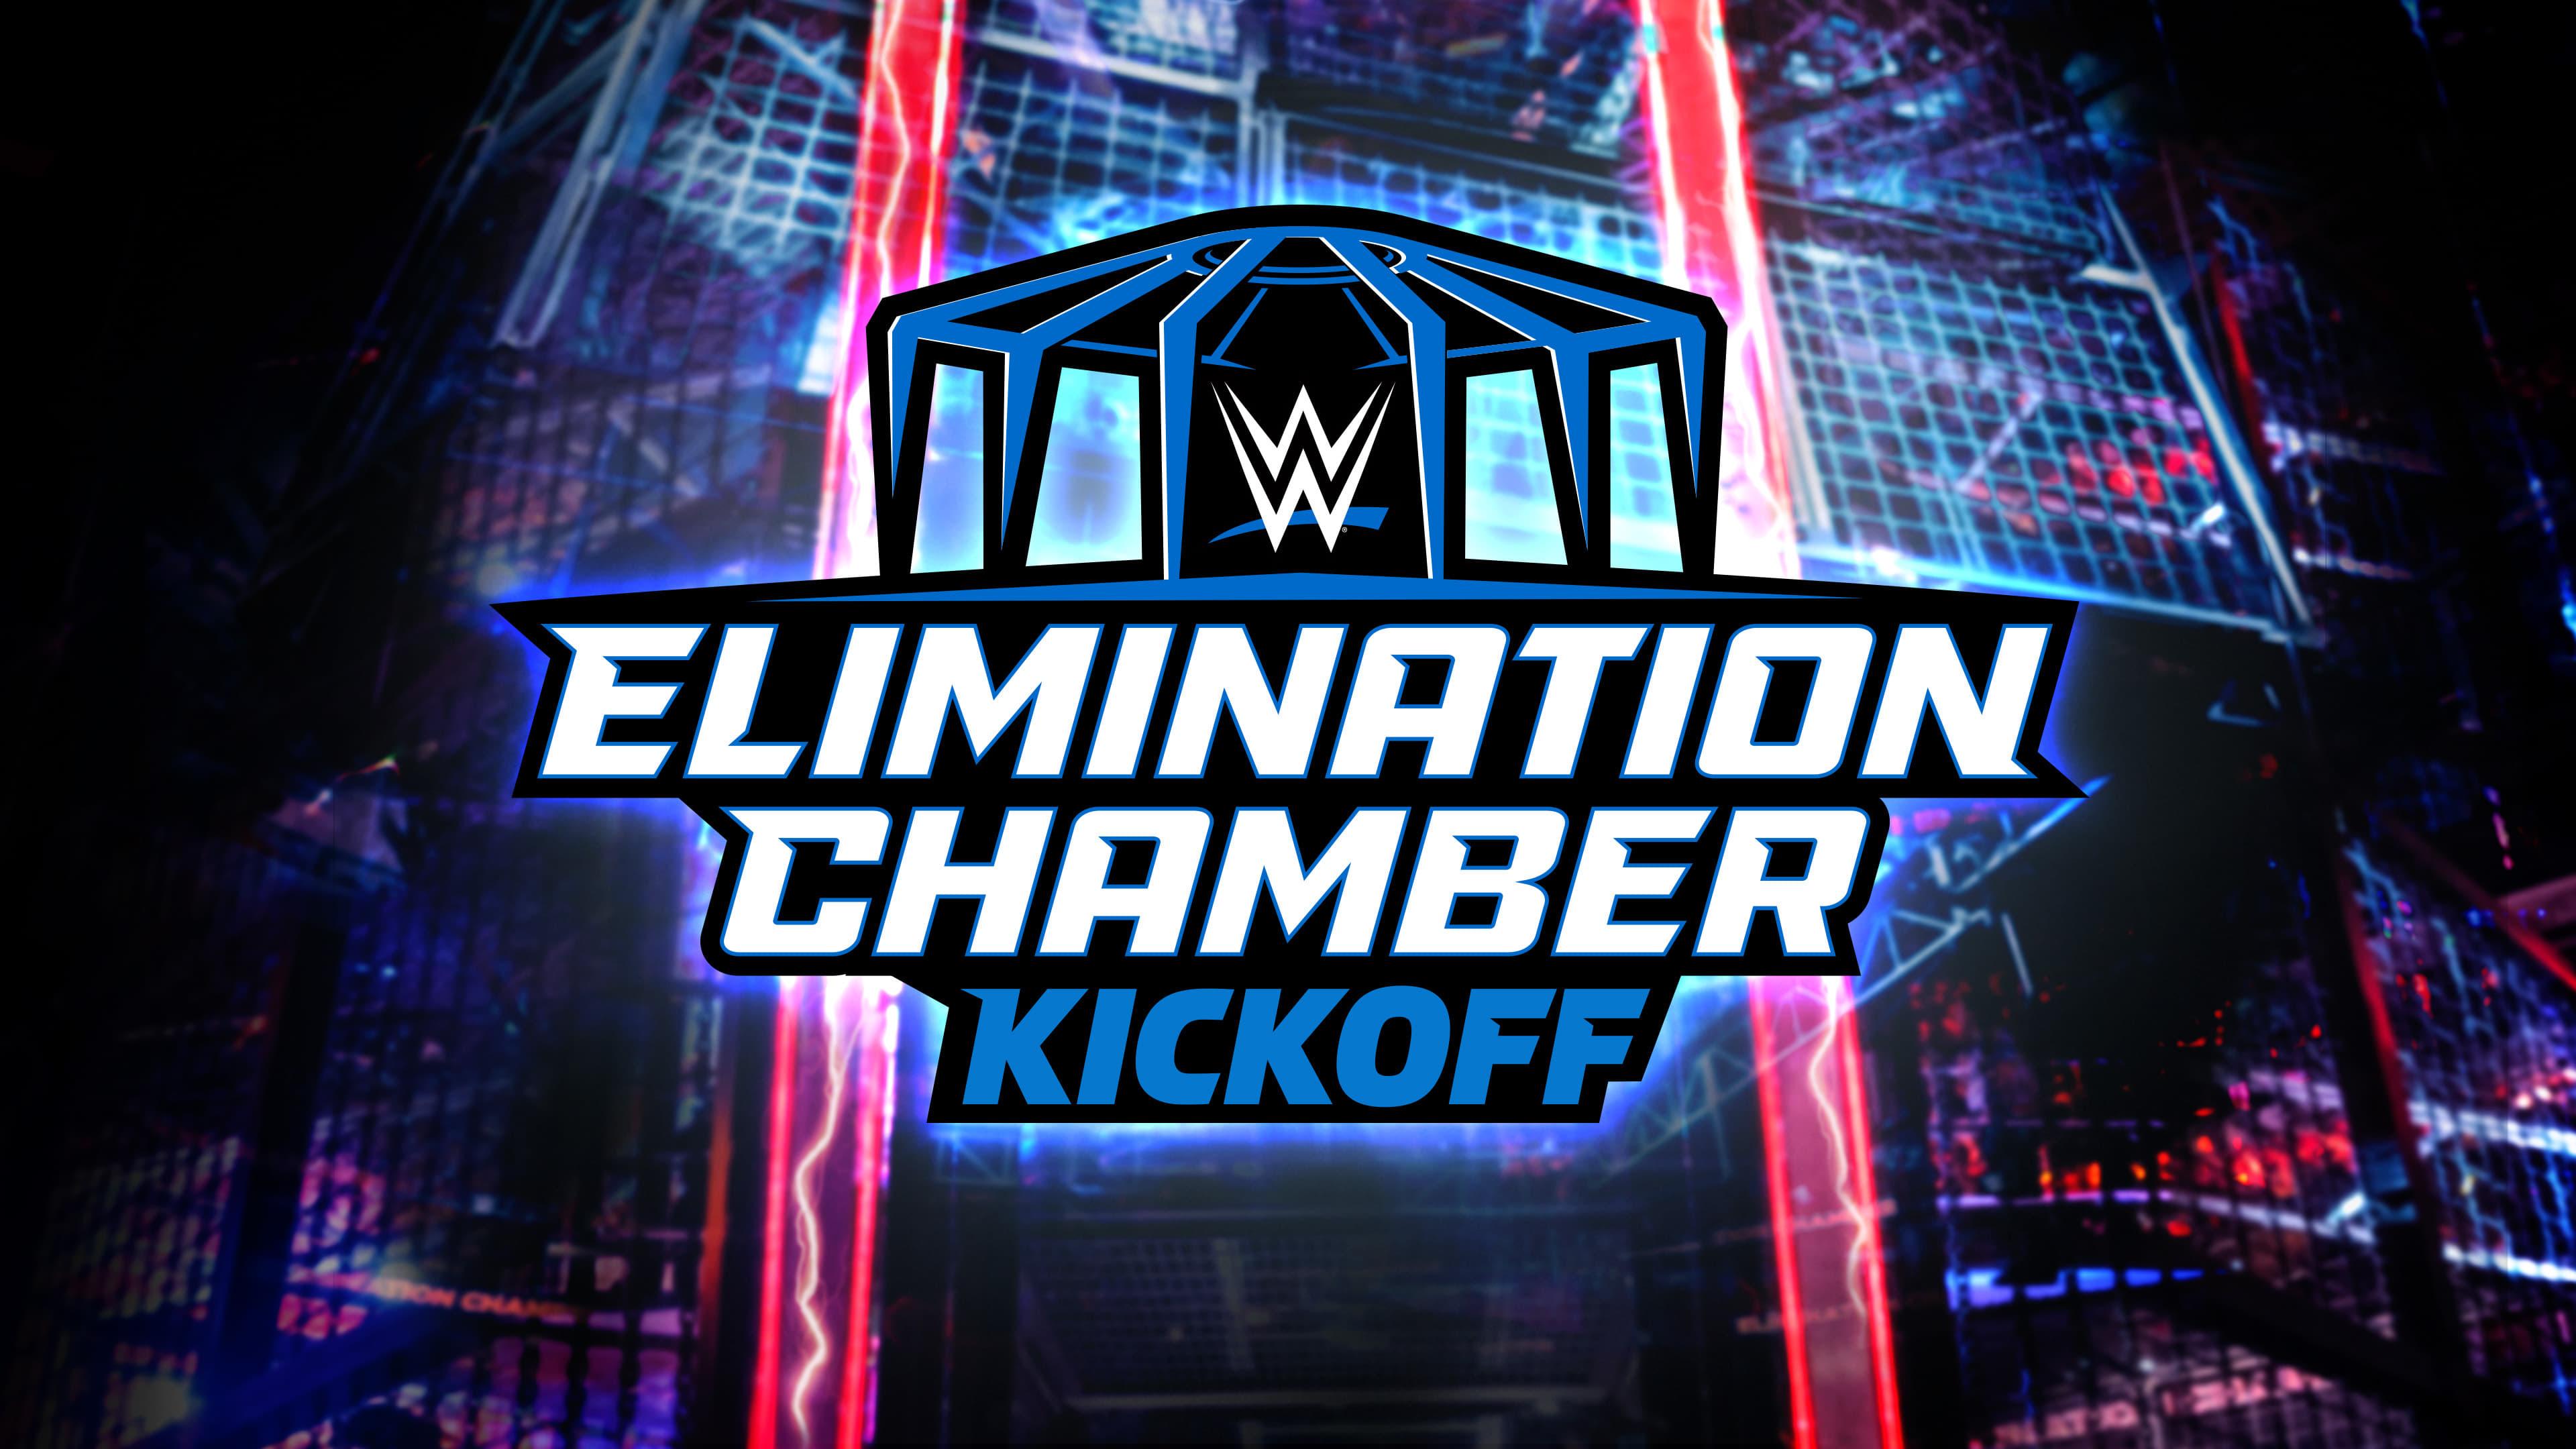 WWE Elimination Chamber 2023 Kickoff backdrop